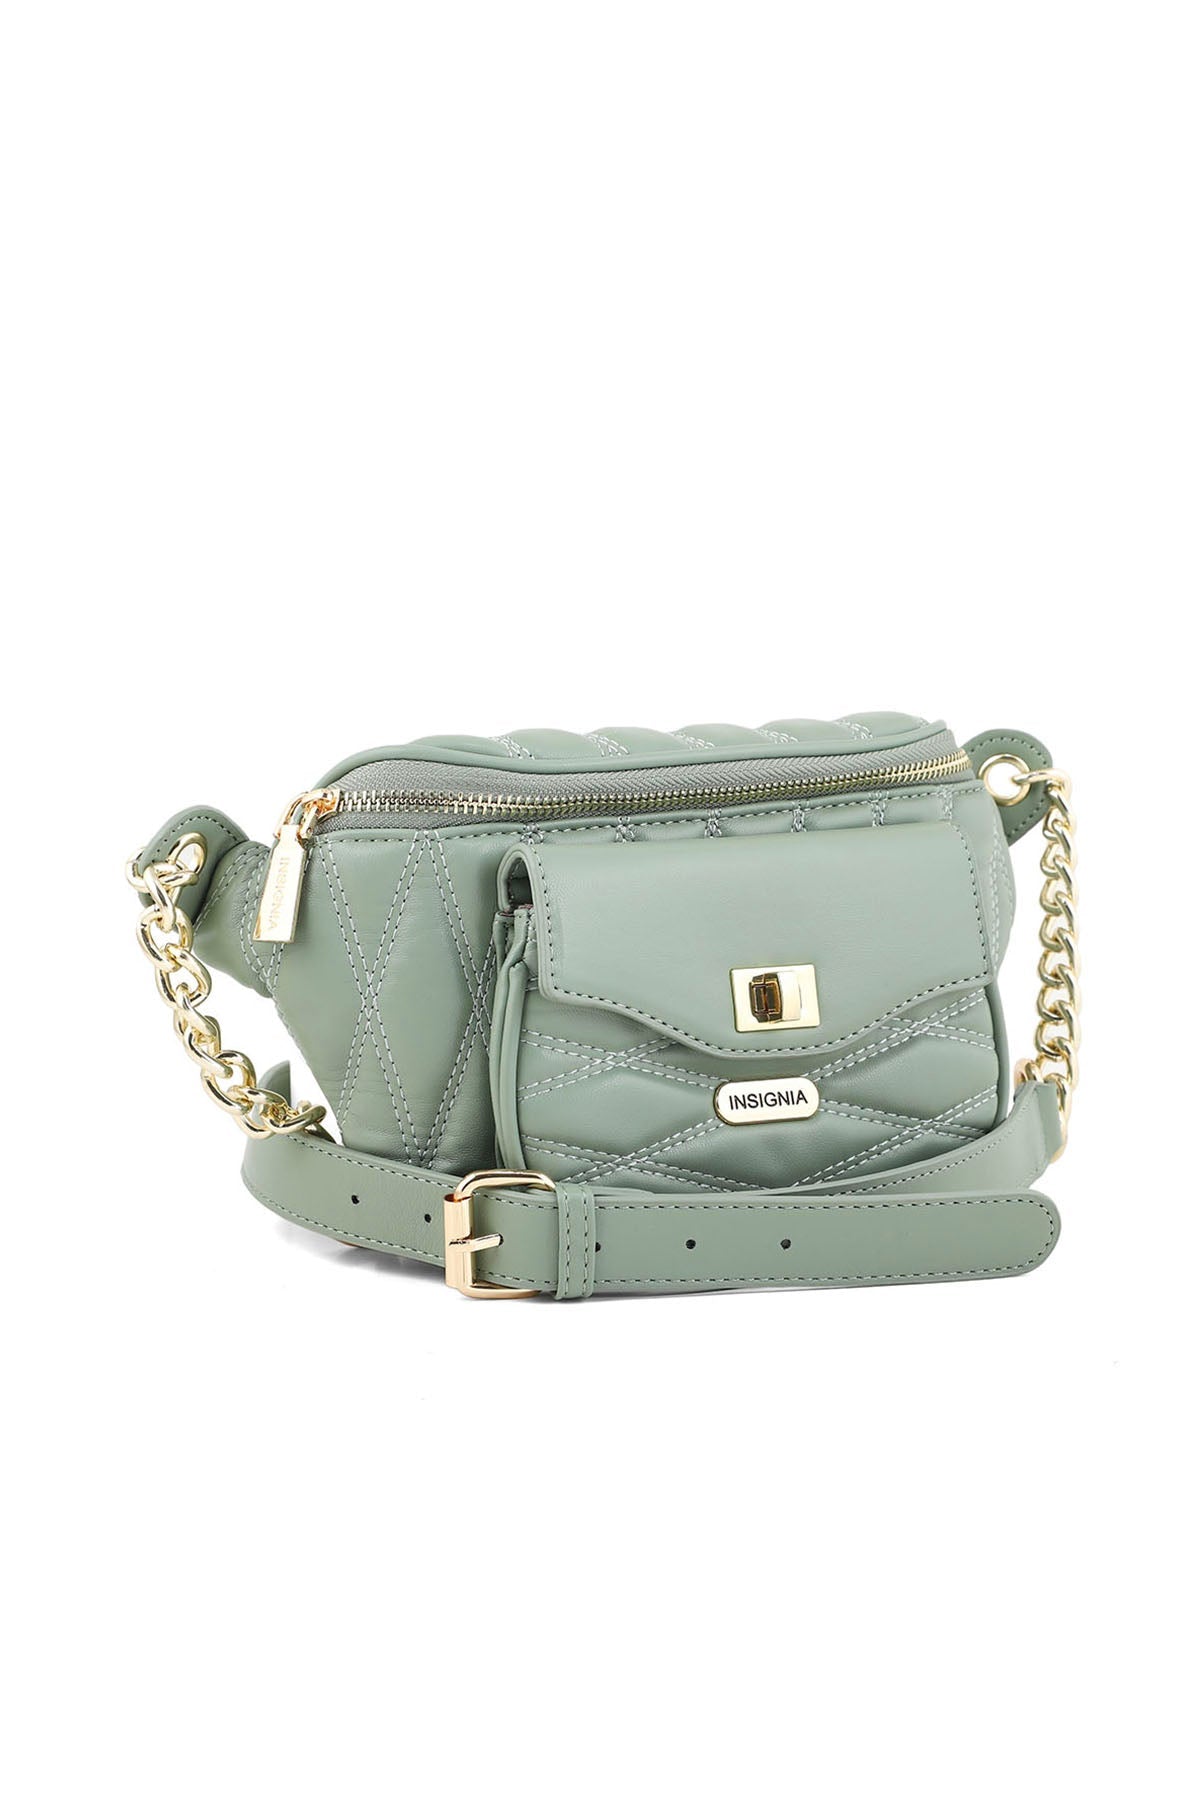 Feny Shoulder Bags B15059-Green